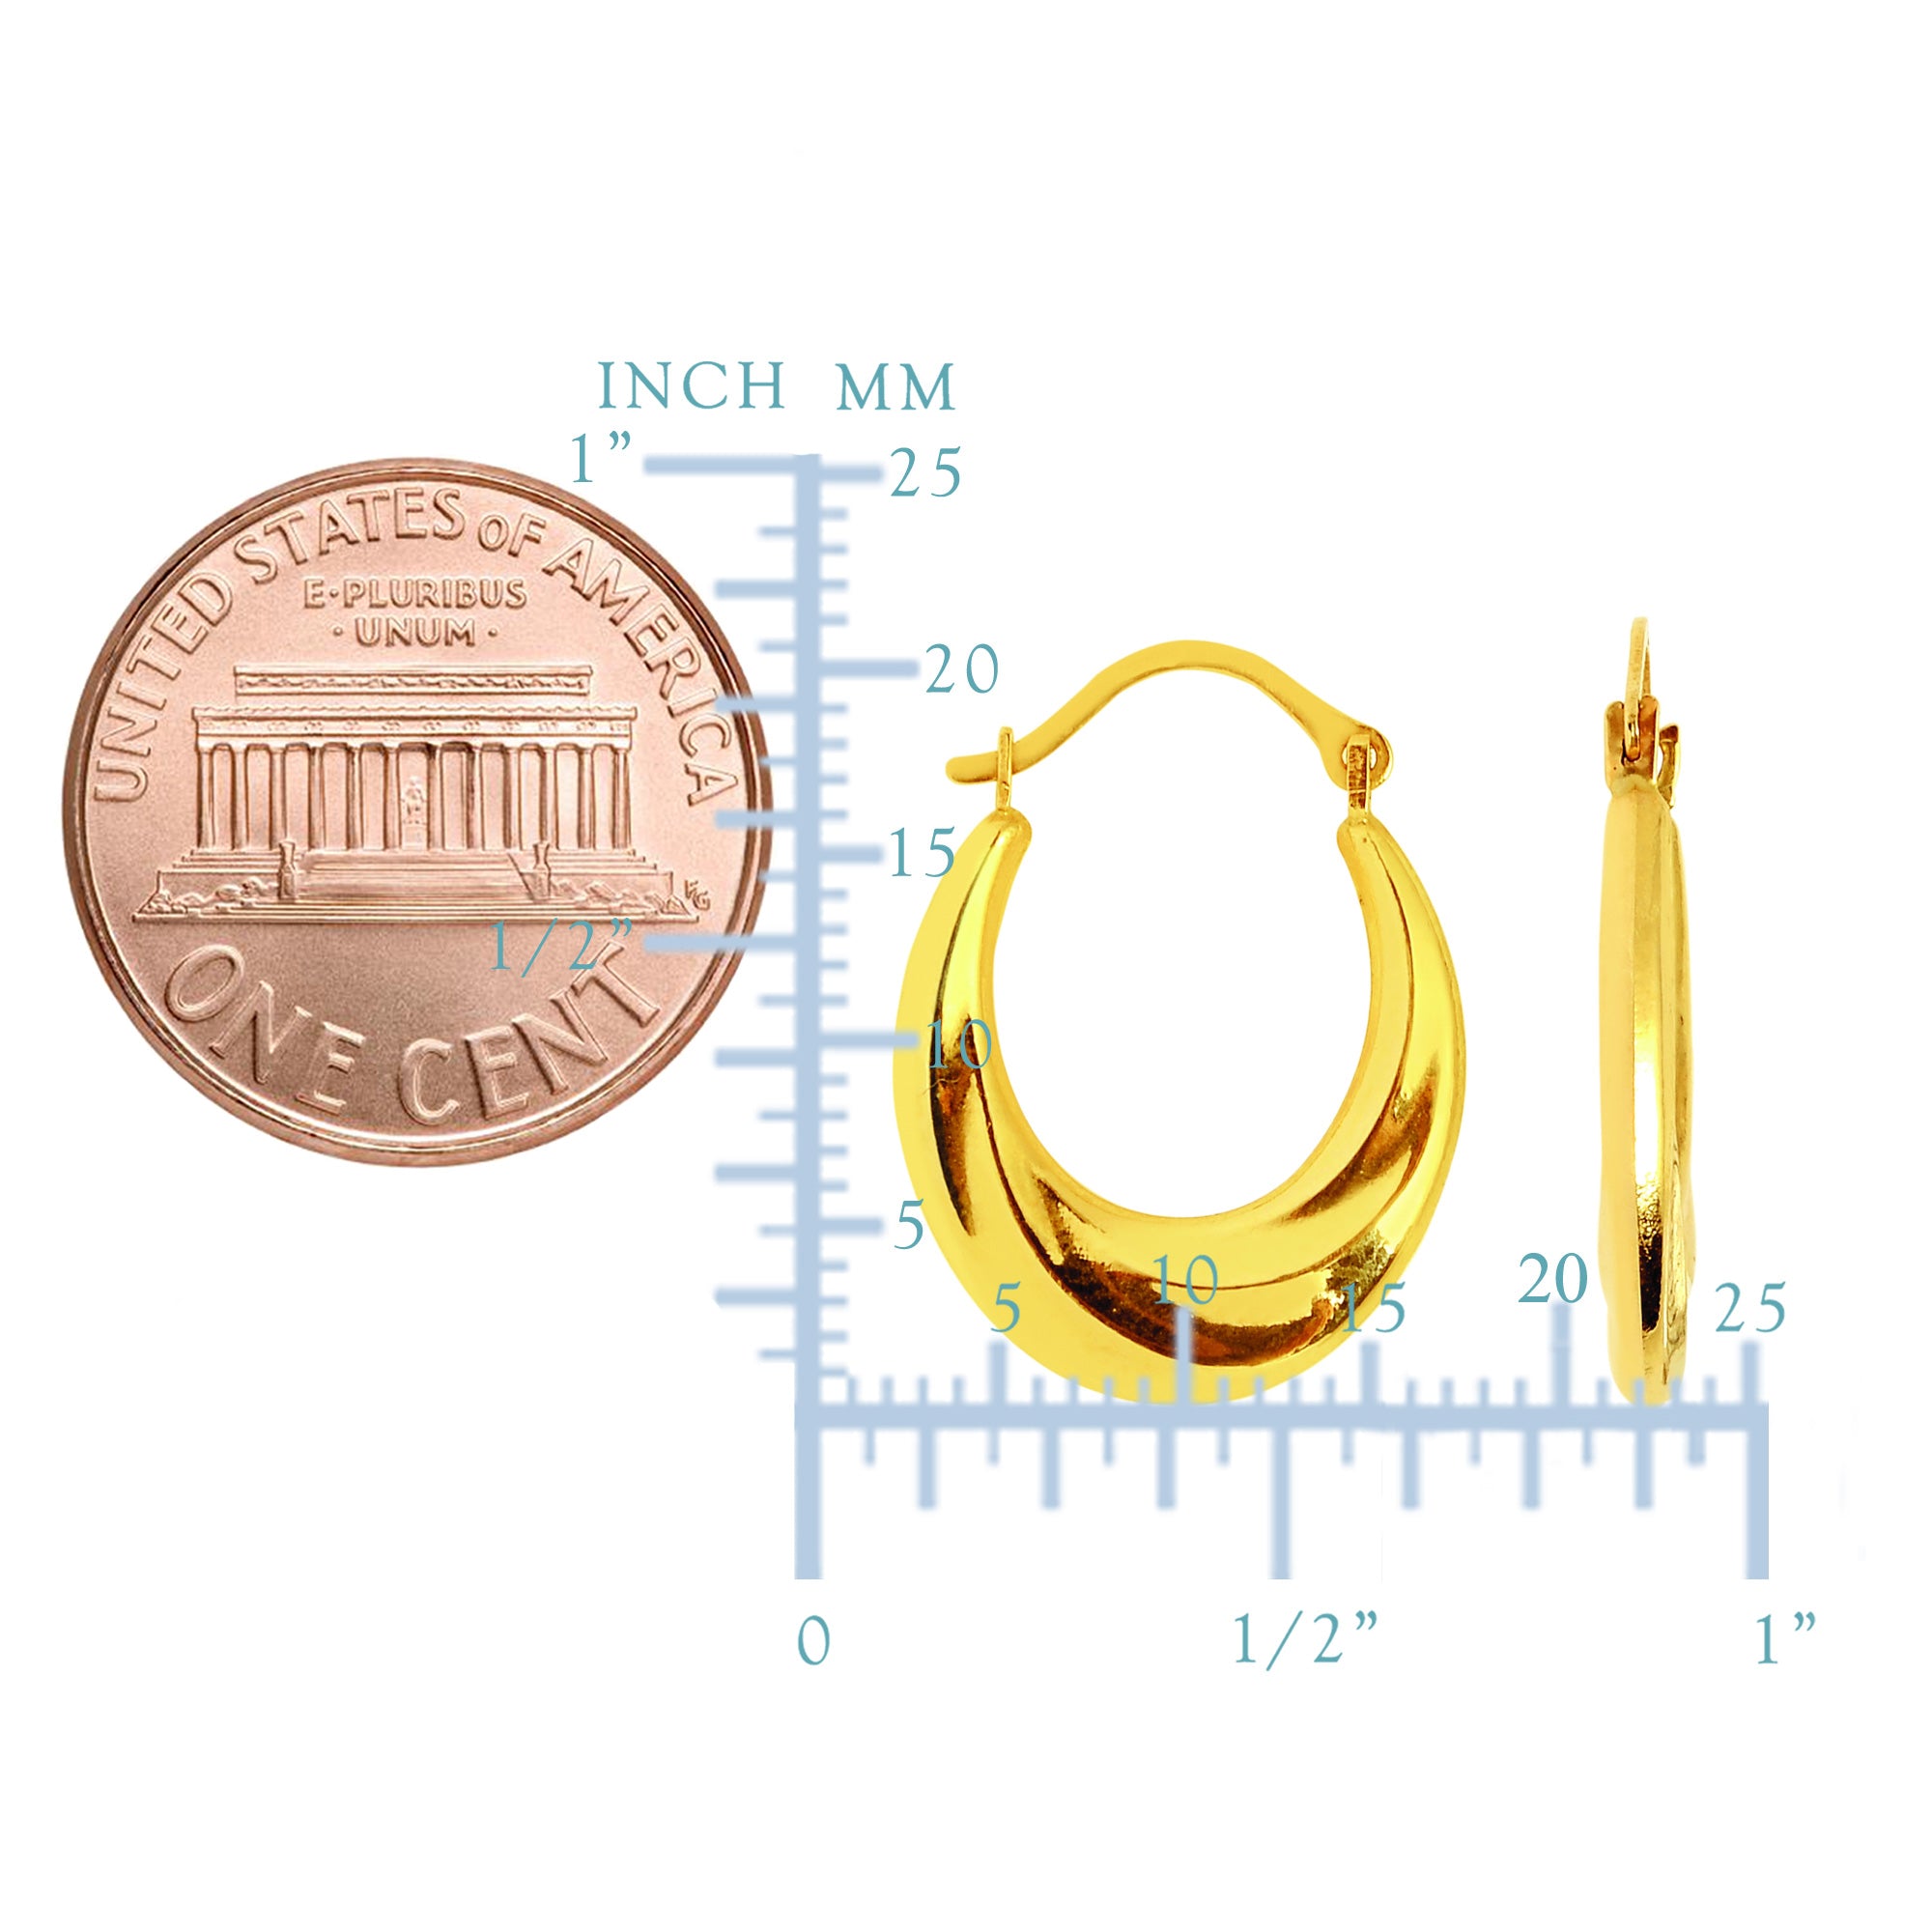 10k Yellow Gold Swirl Textured Graduated Oval Hoop Earrings, Diameter 20mm fine designer jewelry for men and women